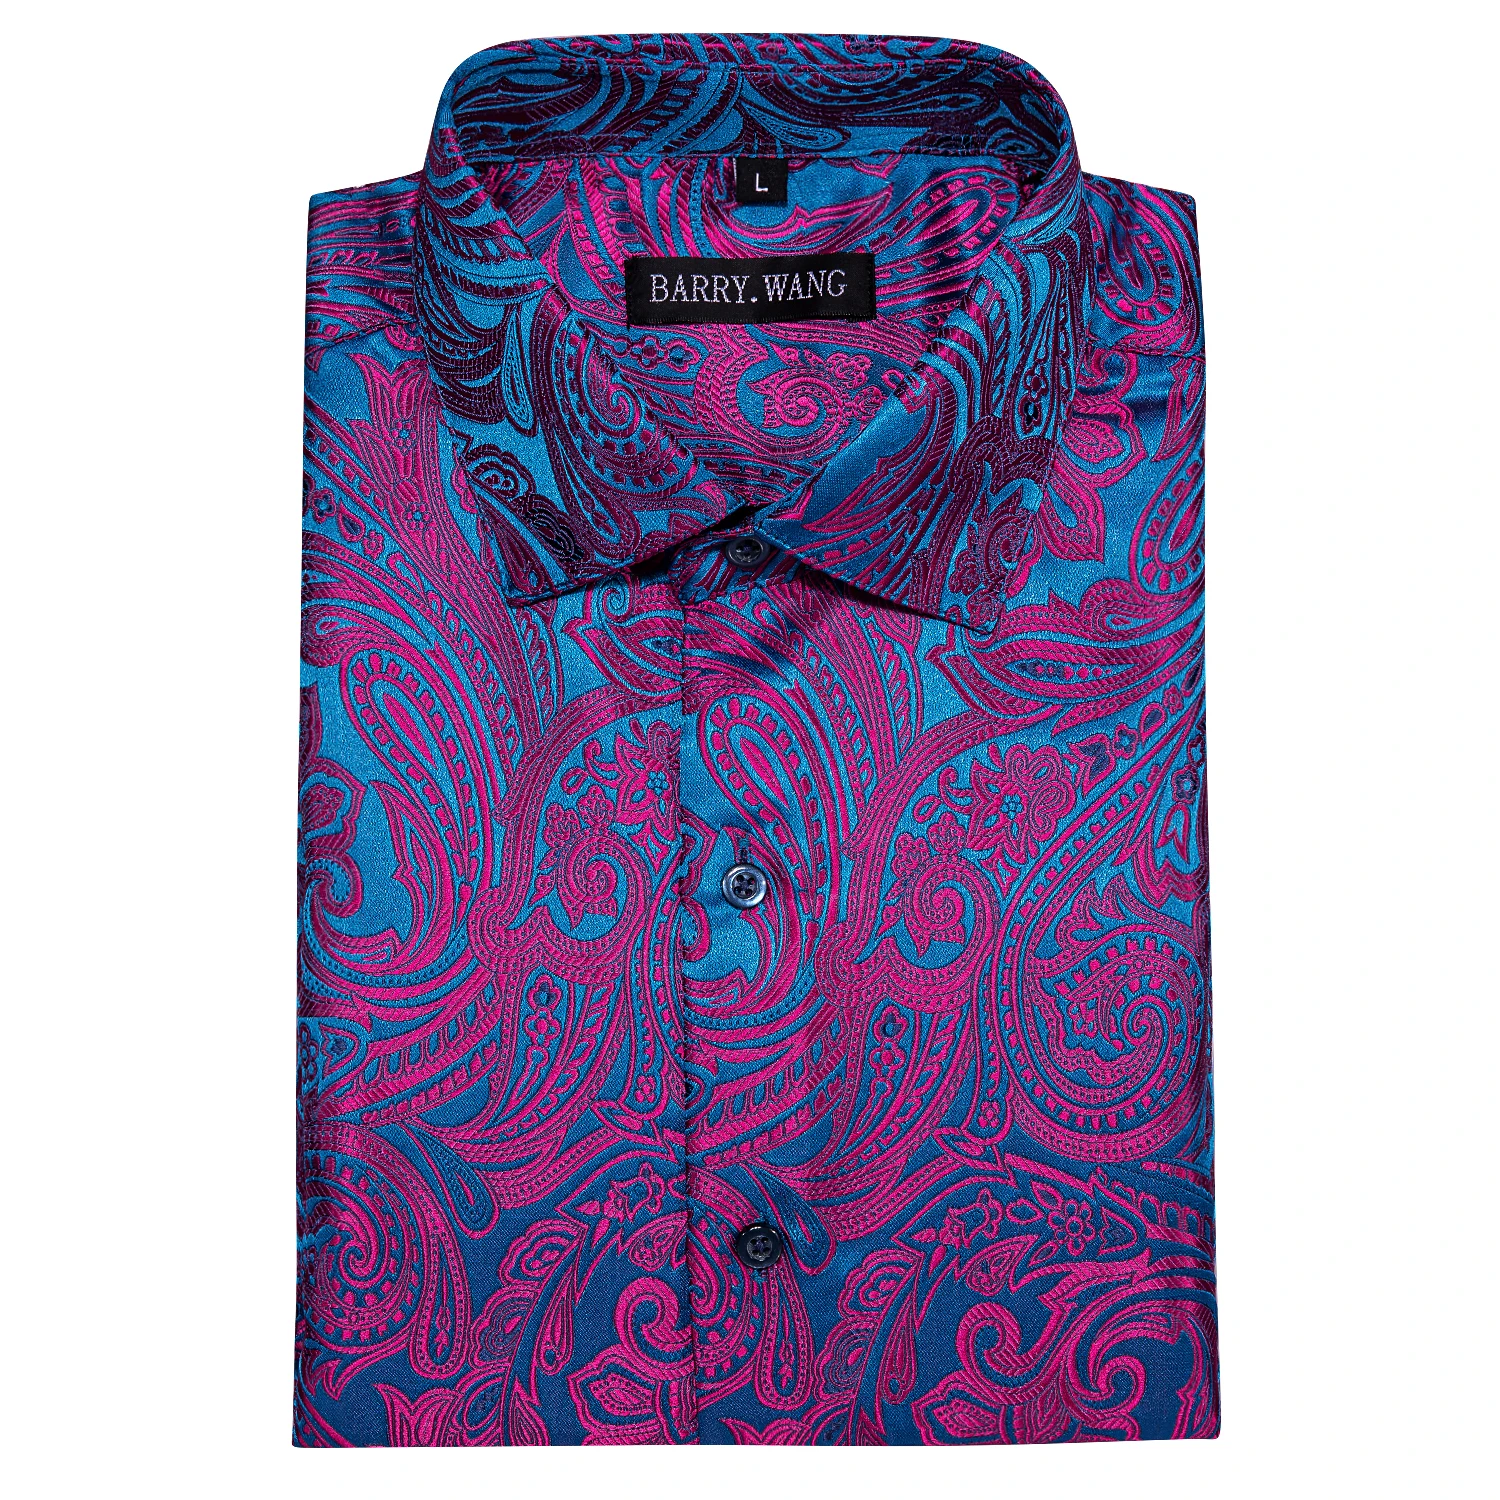 Barry.Wang Luxury Purple Floral Mens Summer Fashion Silk Casual Shirt Stylish Lapel Pattern Short Sleeve Shirt Male Blouse Fit